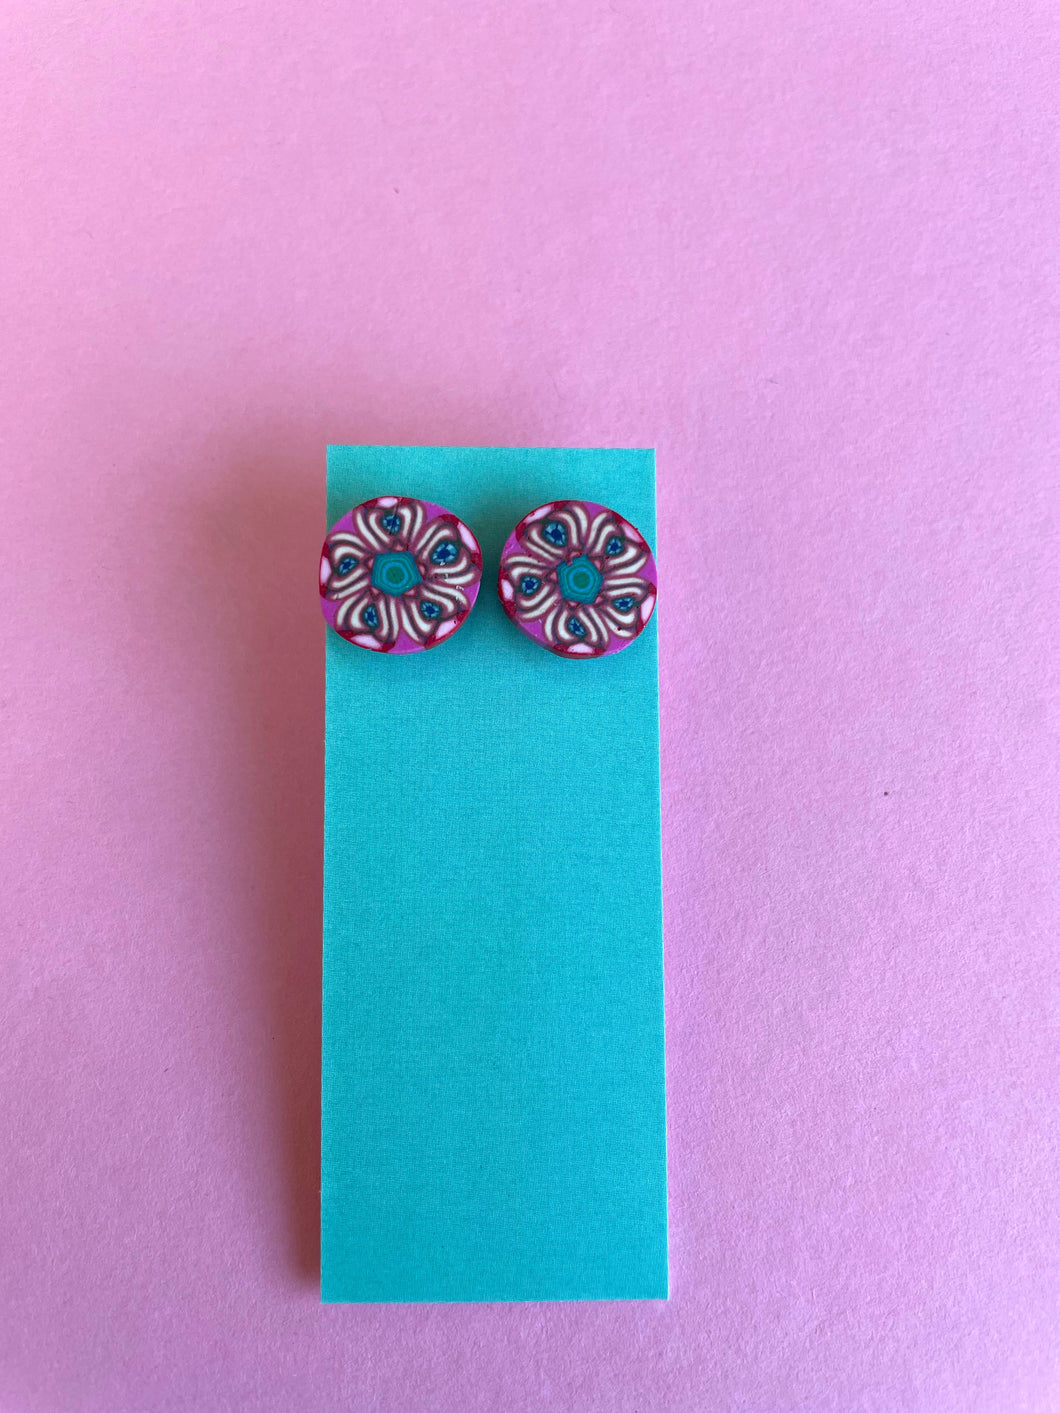 Stud earrings in pink flower design